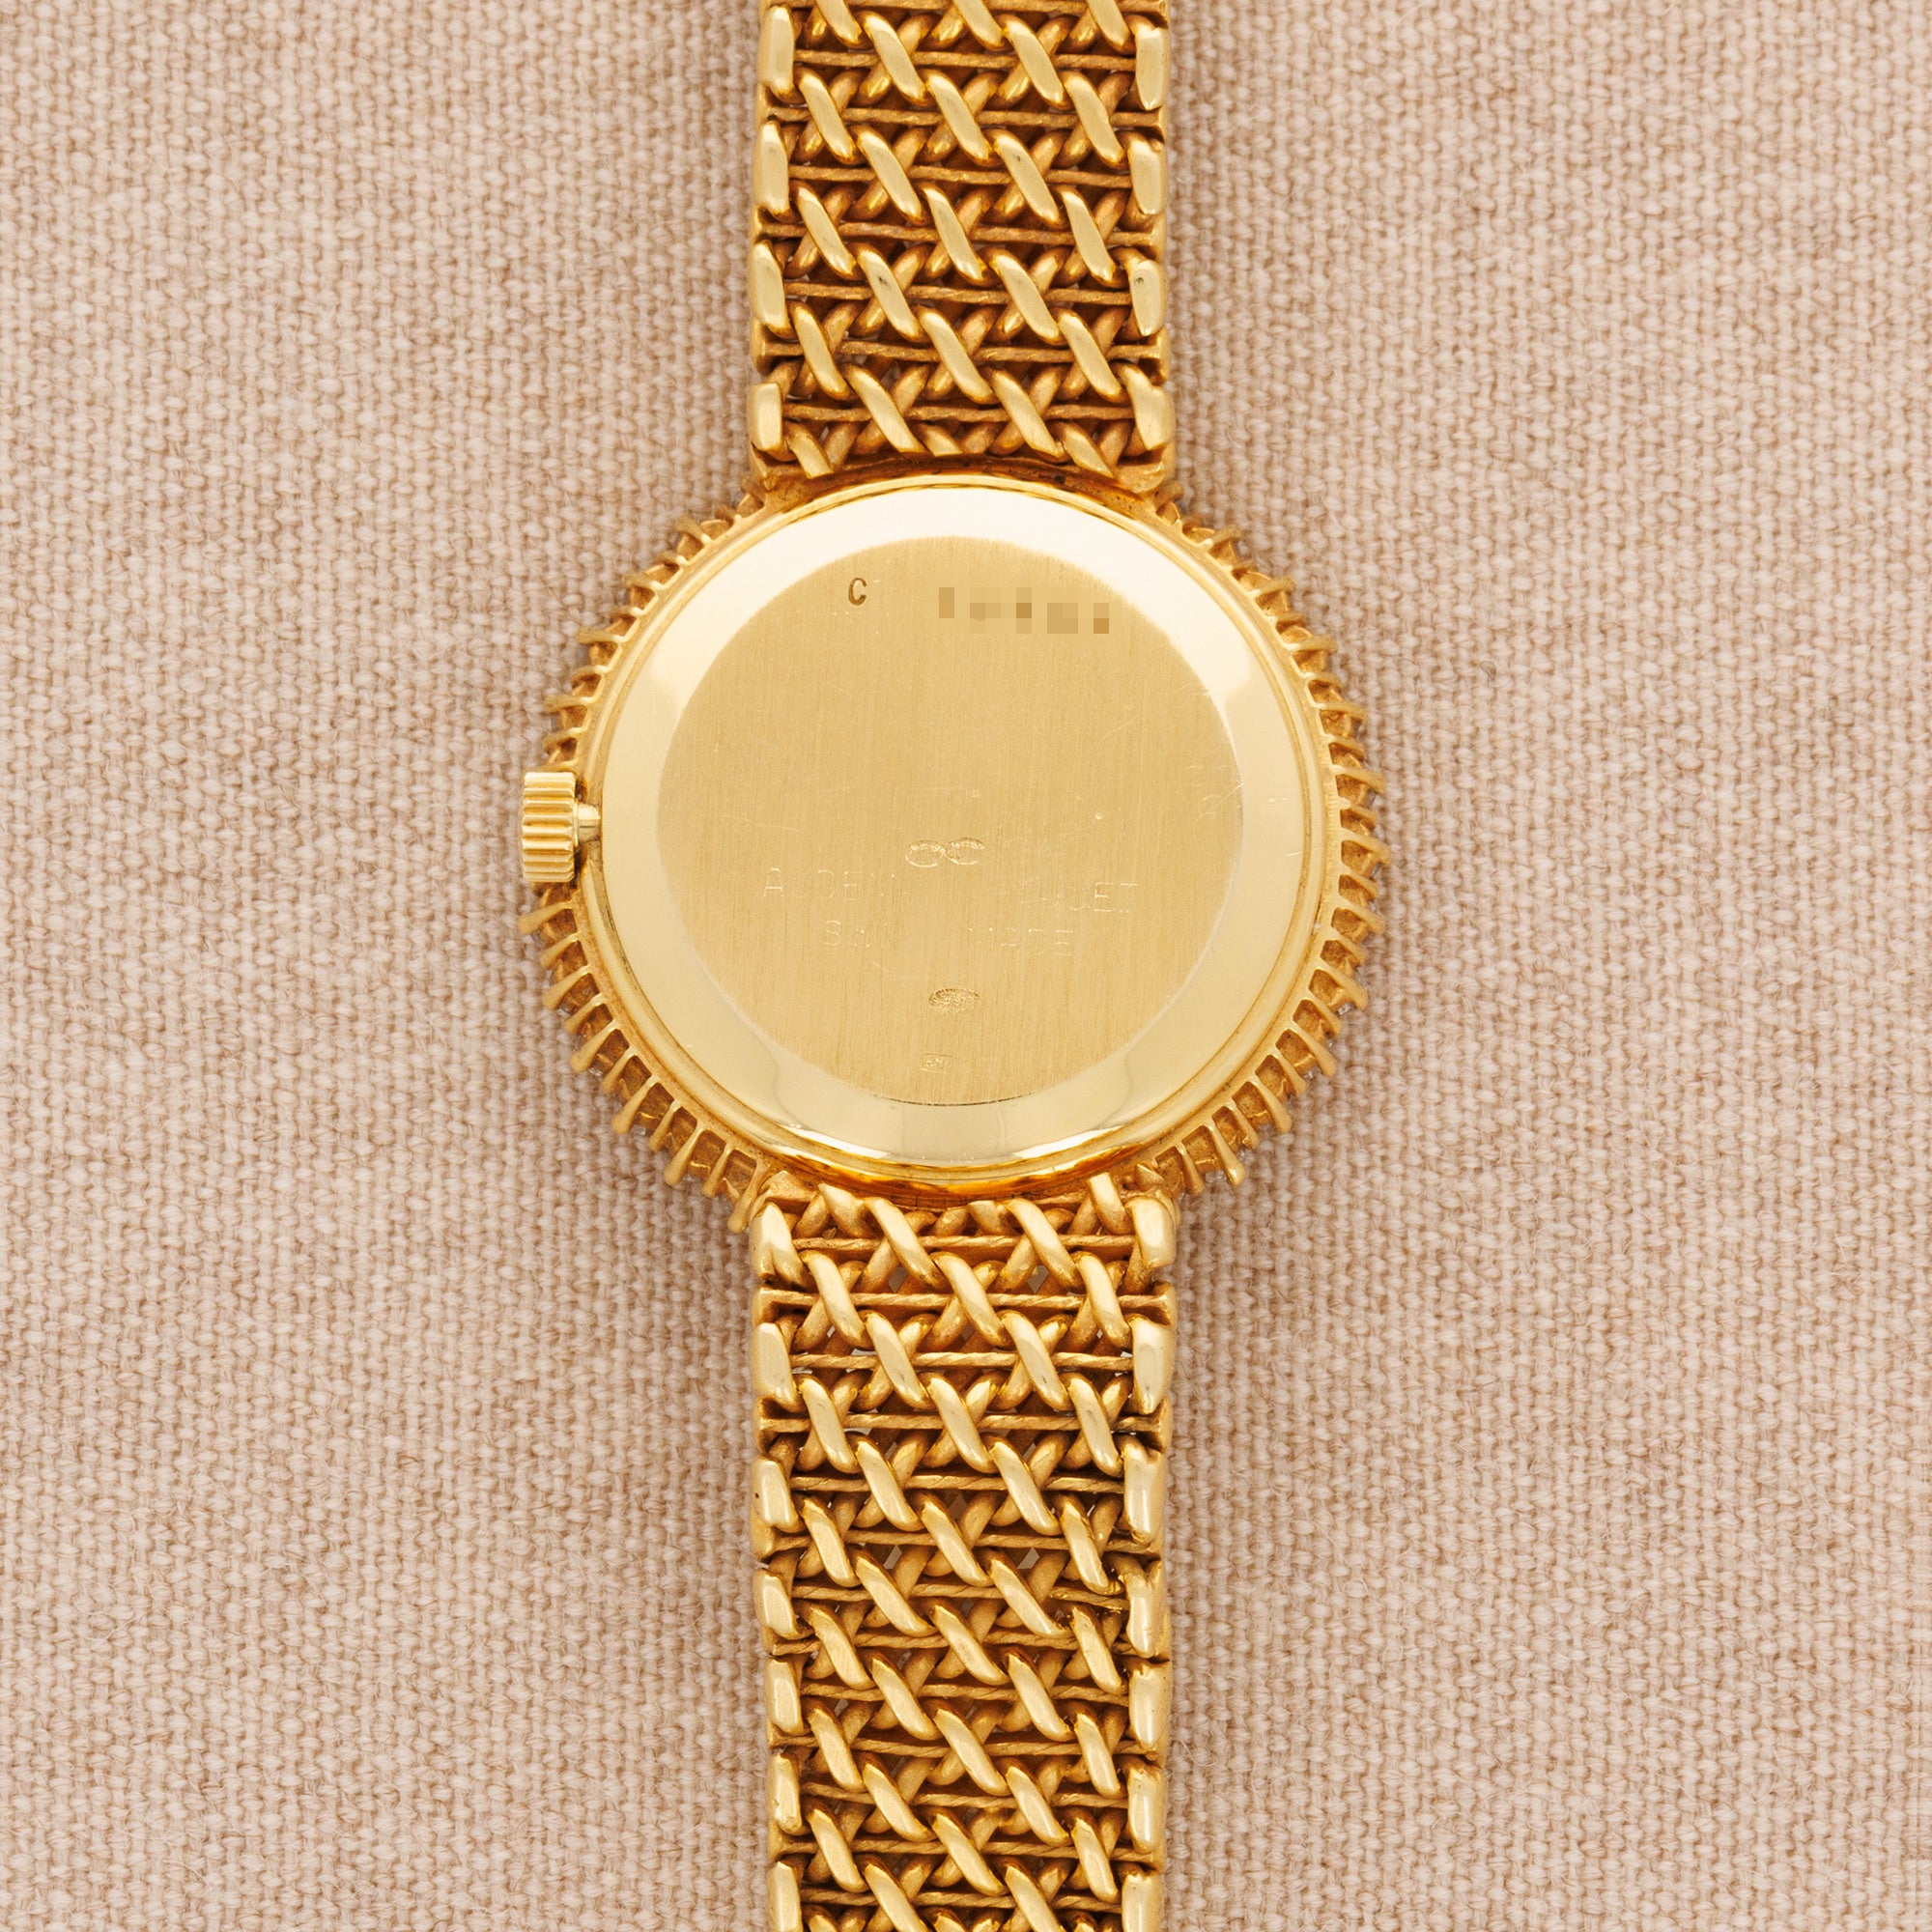 Audemars Piguet Yellow Gold Diamond Moonphase Watch